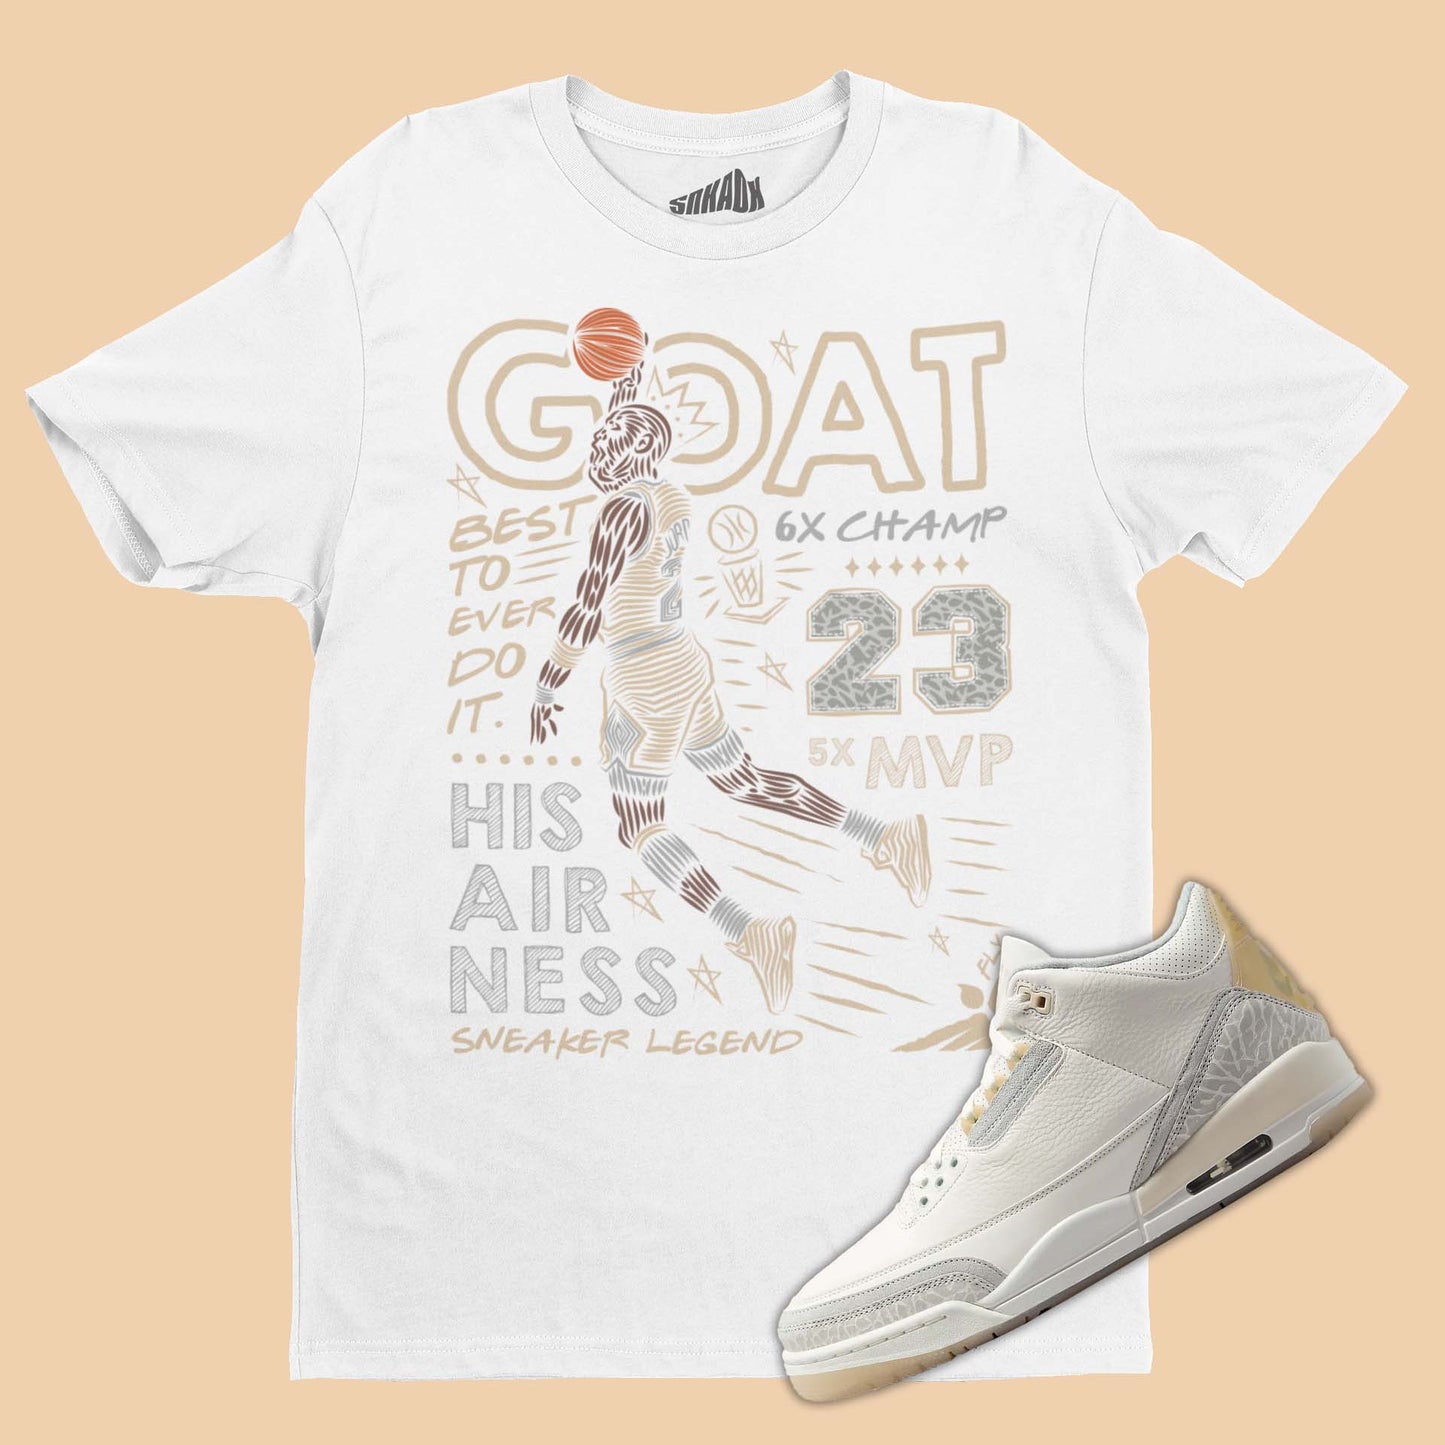 GOAT T-Shirt Matching Air Jordan 3 Craft Ivory